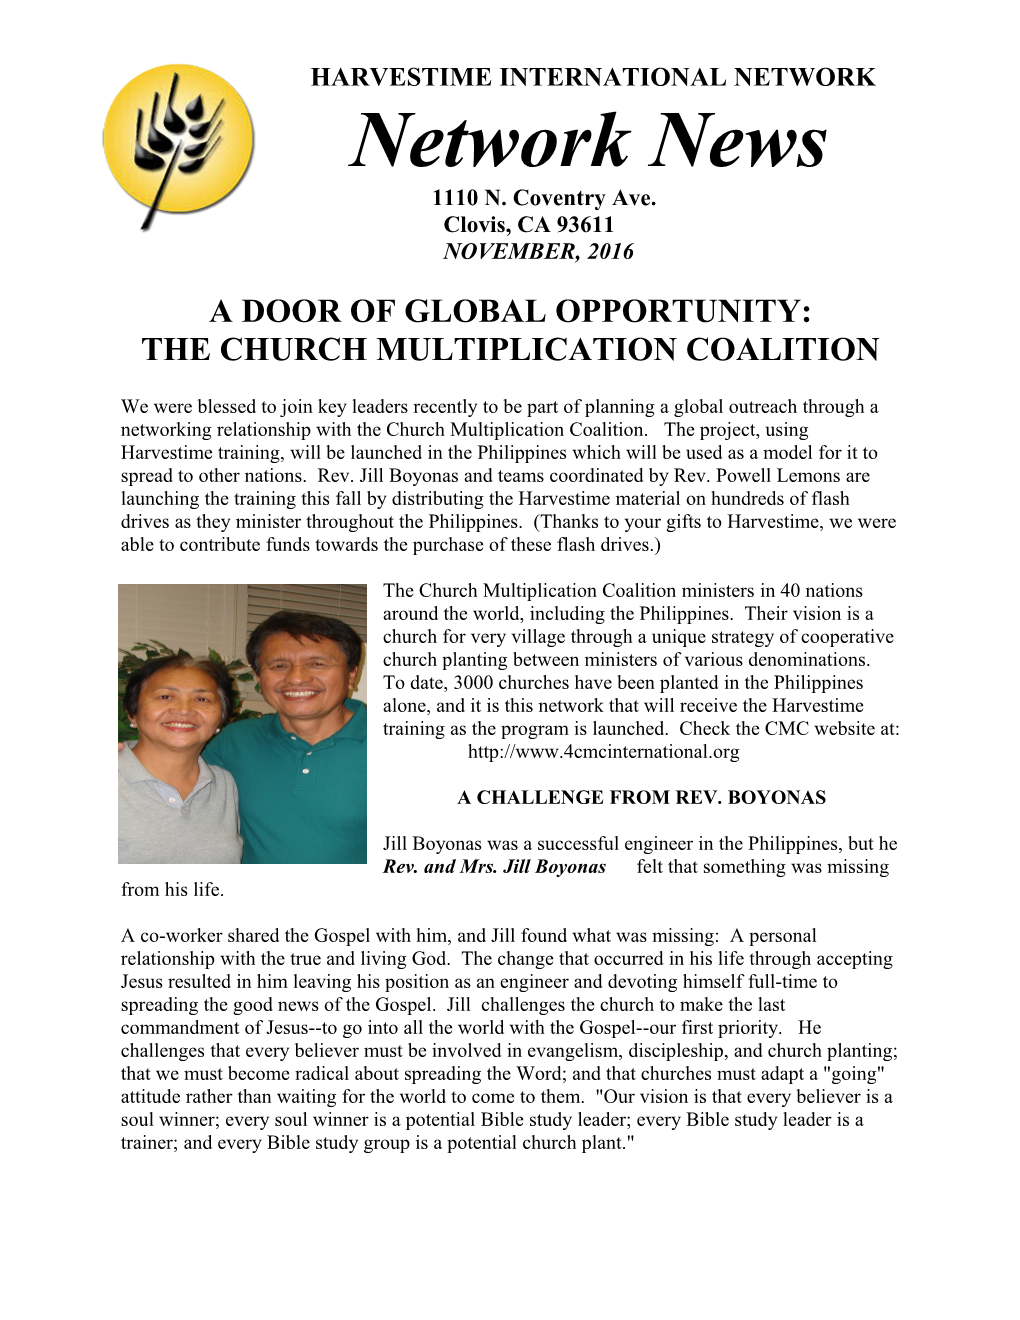 The Church Multiplication Coalition